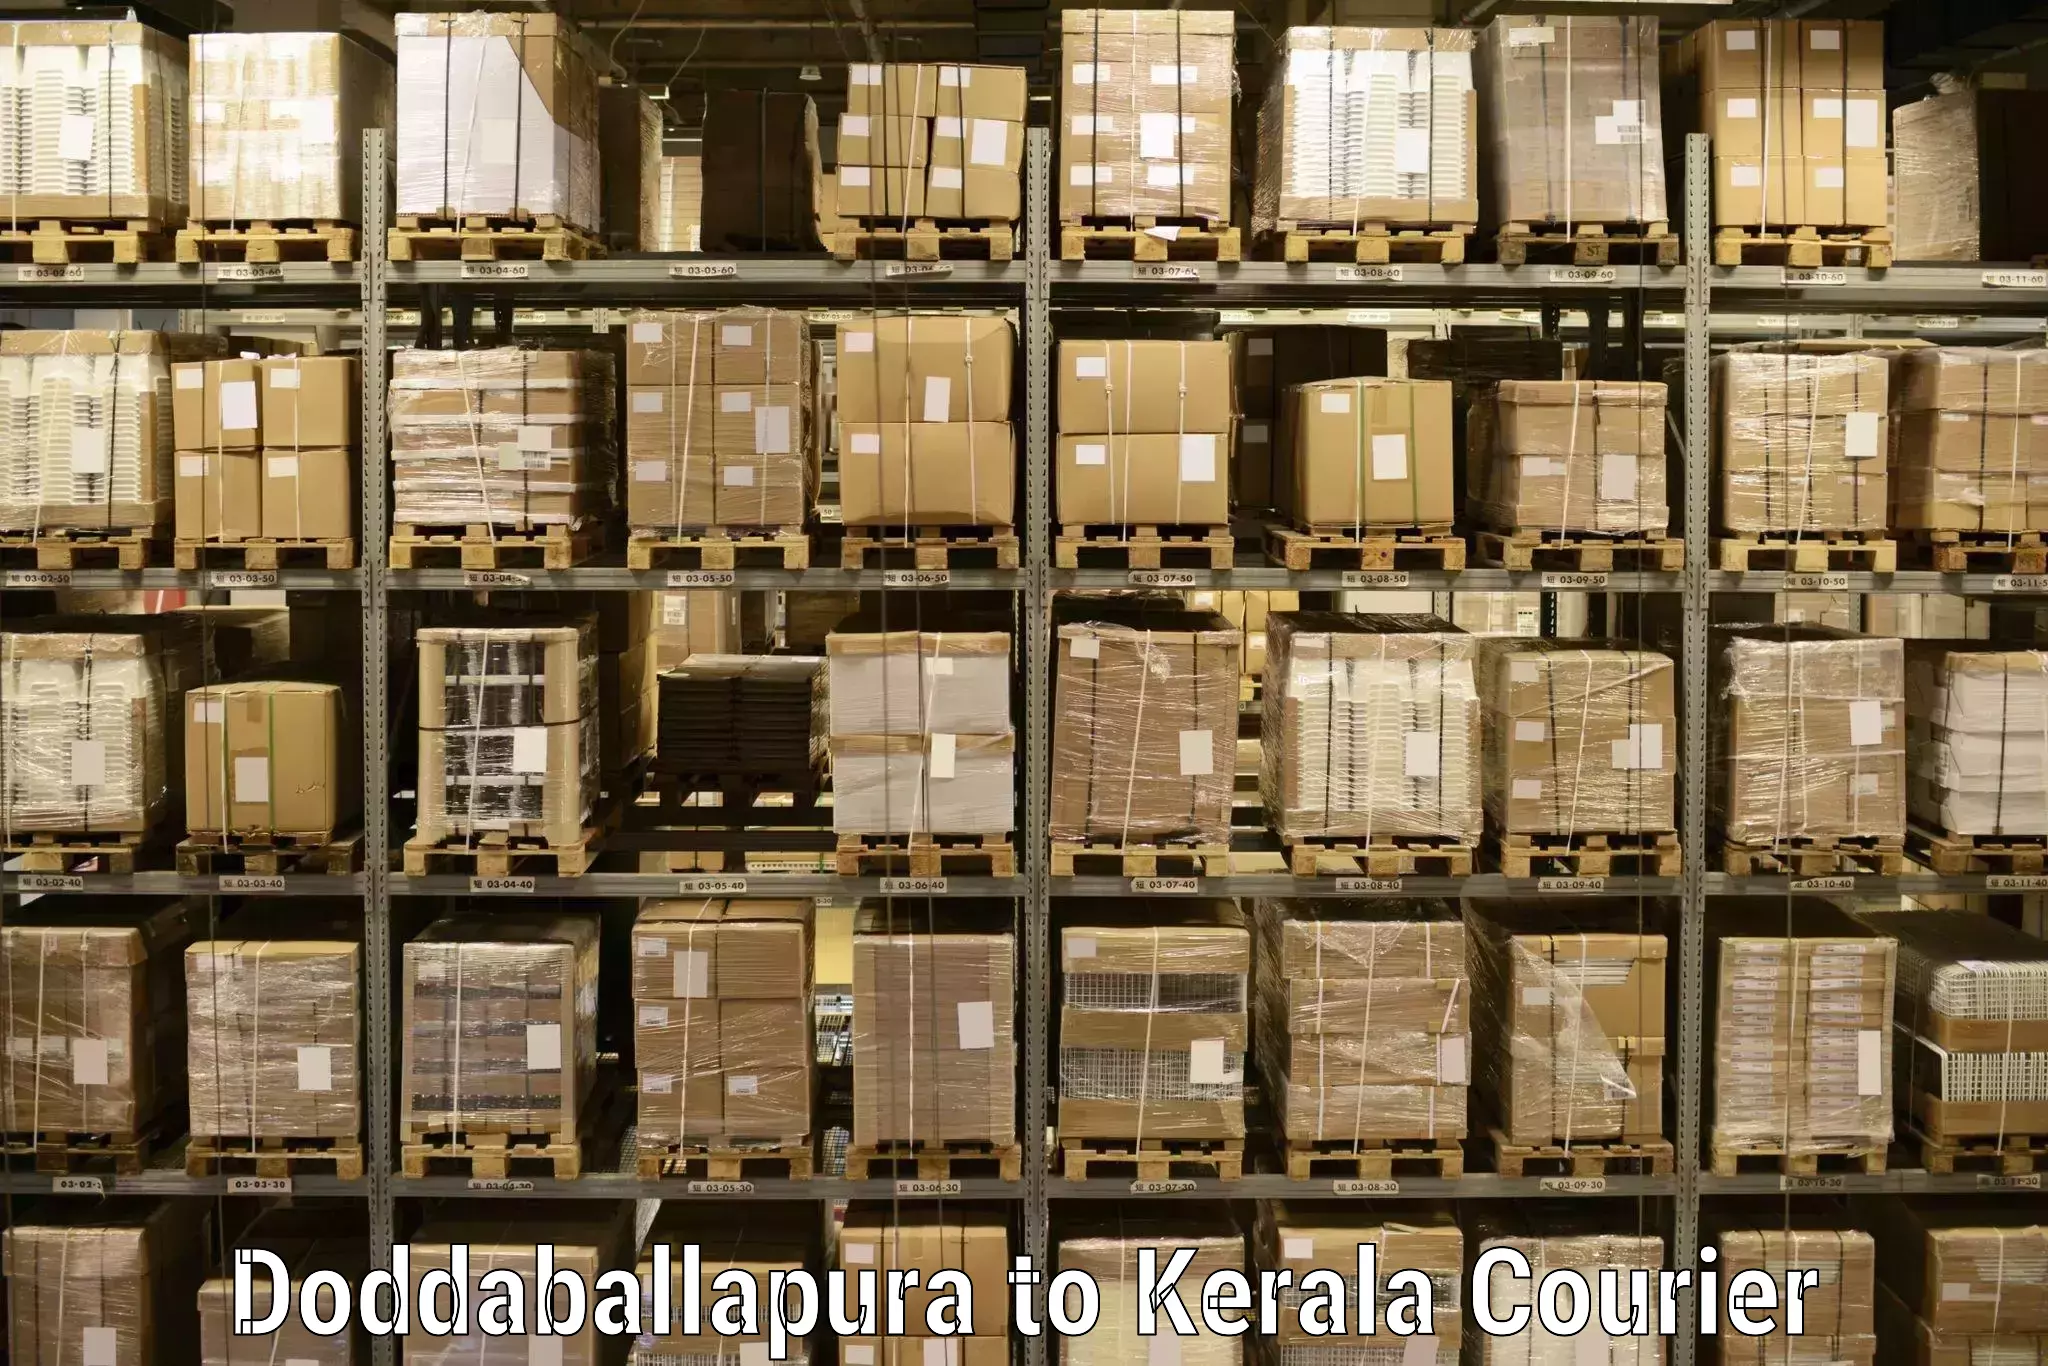 User-friendly delivery service Doddaballapura to Karukachal